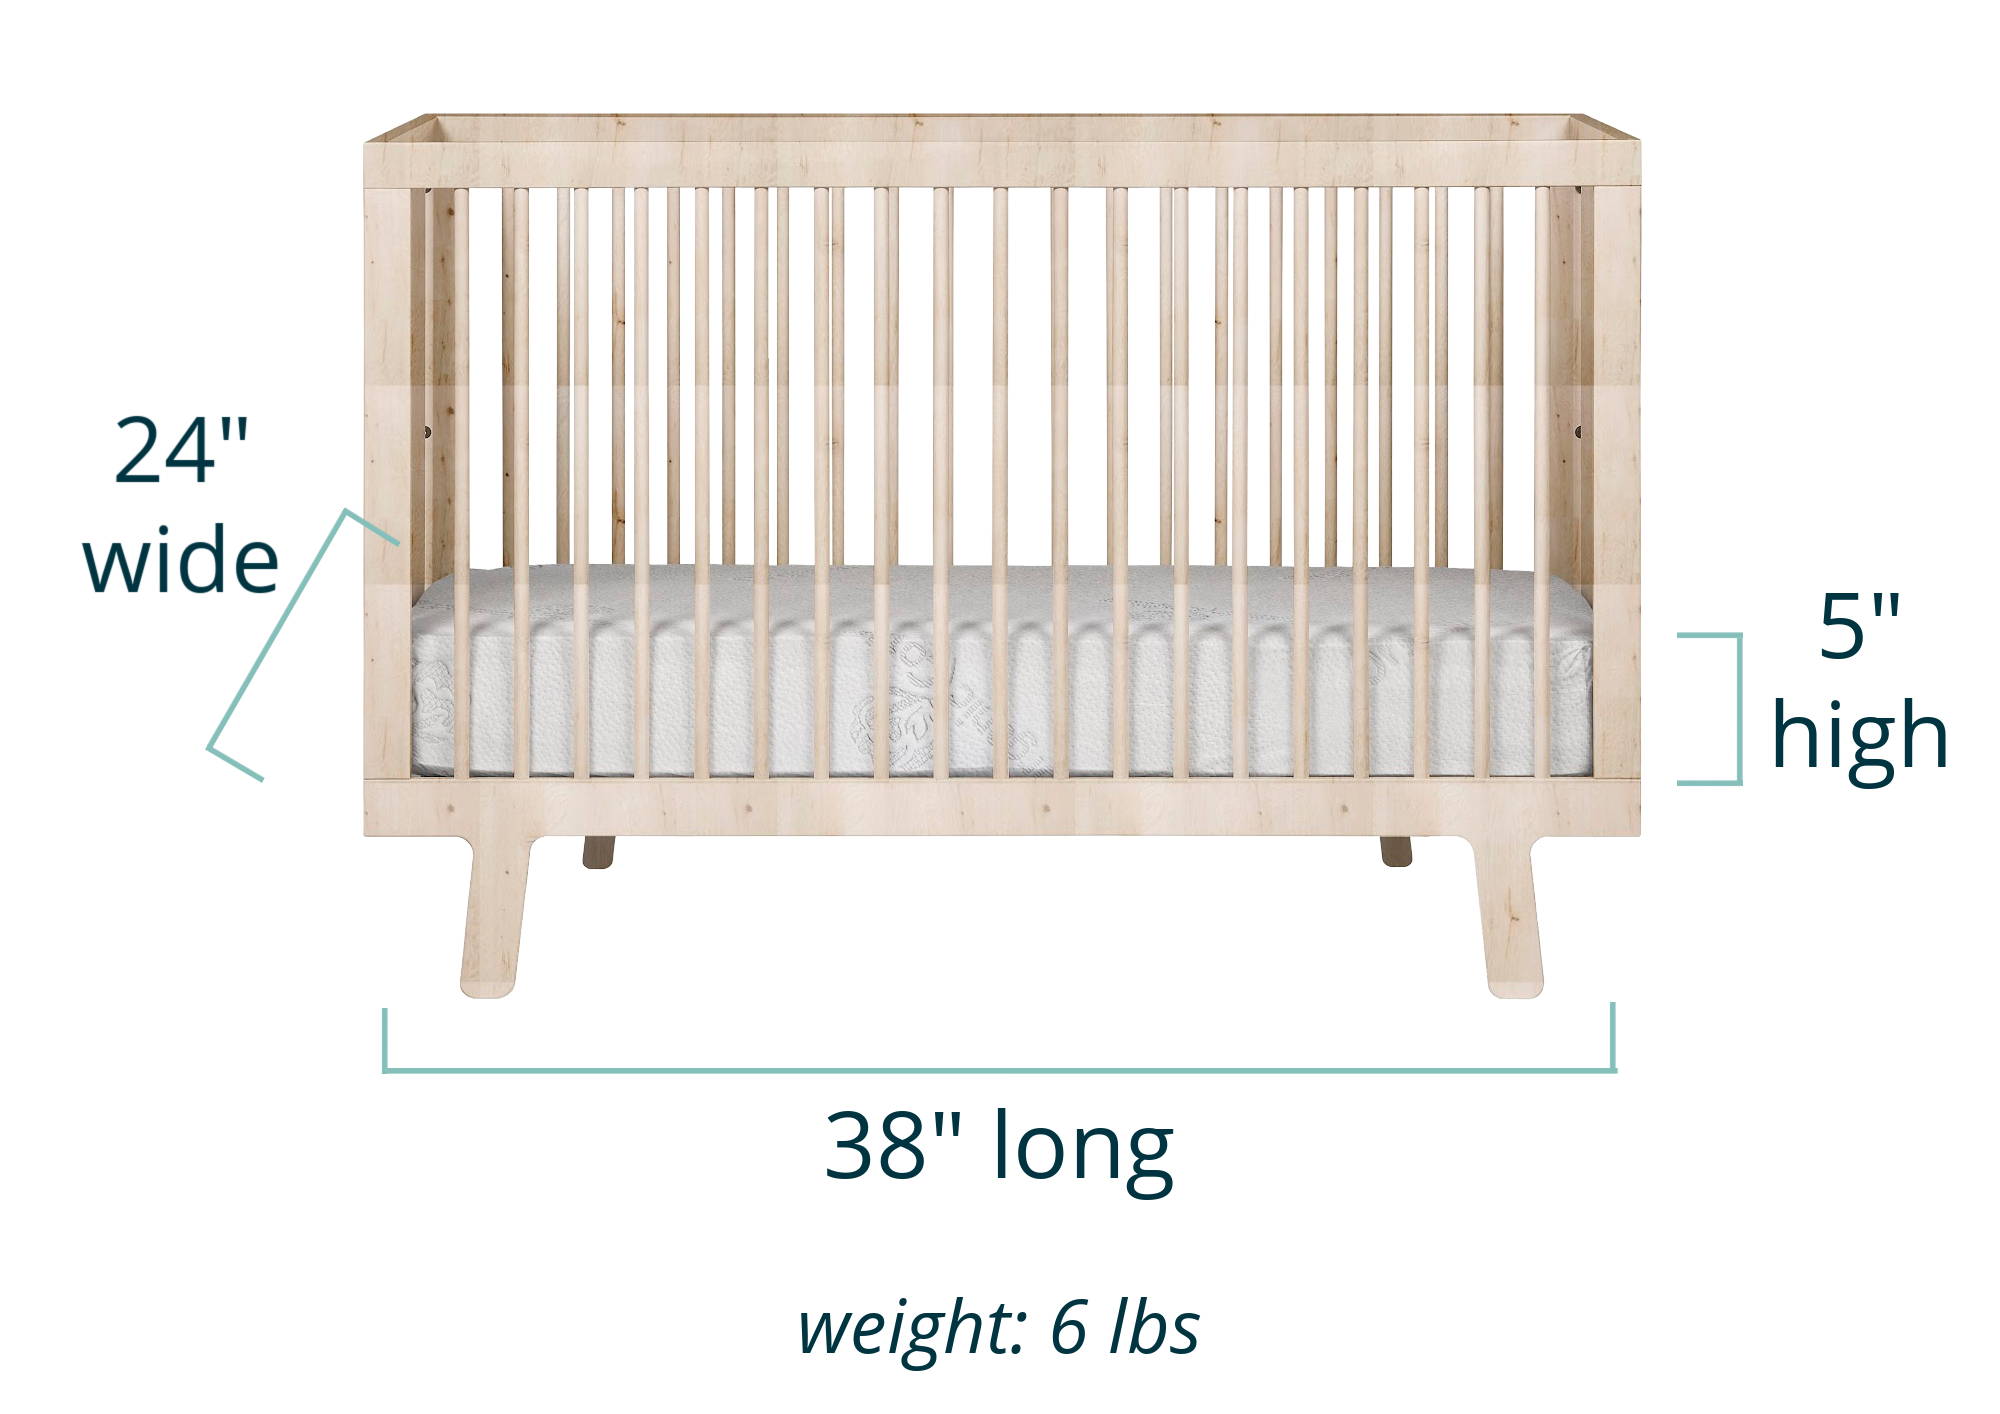 Luxe Mini5 mini crib mattress in a crib showing dimensions of 24